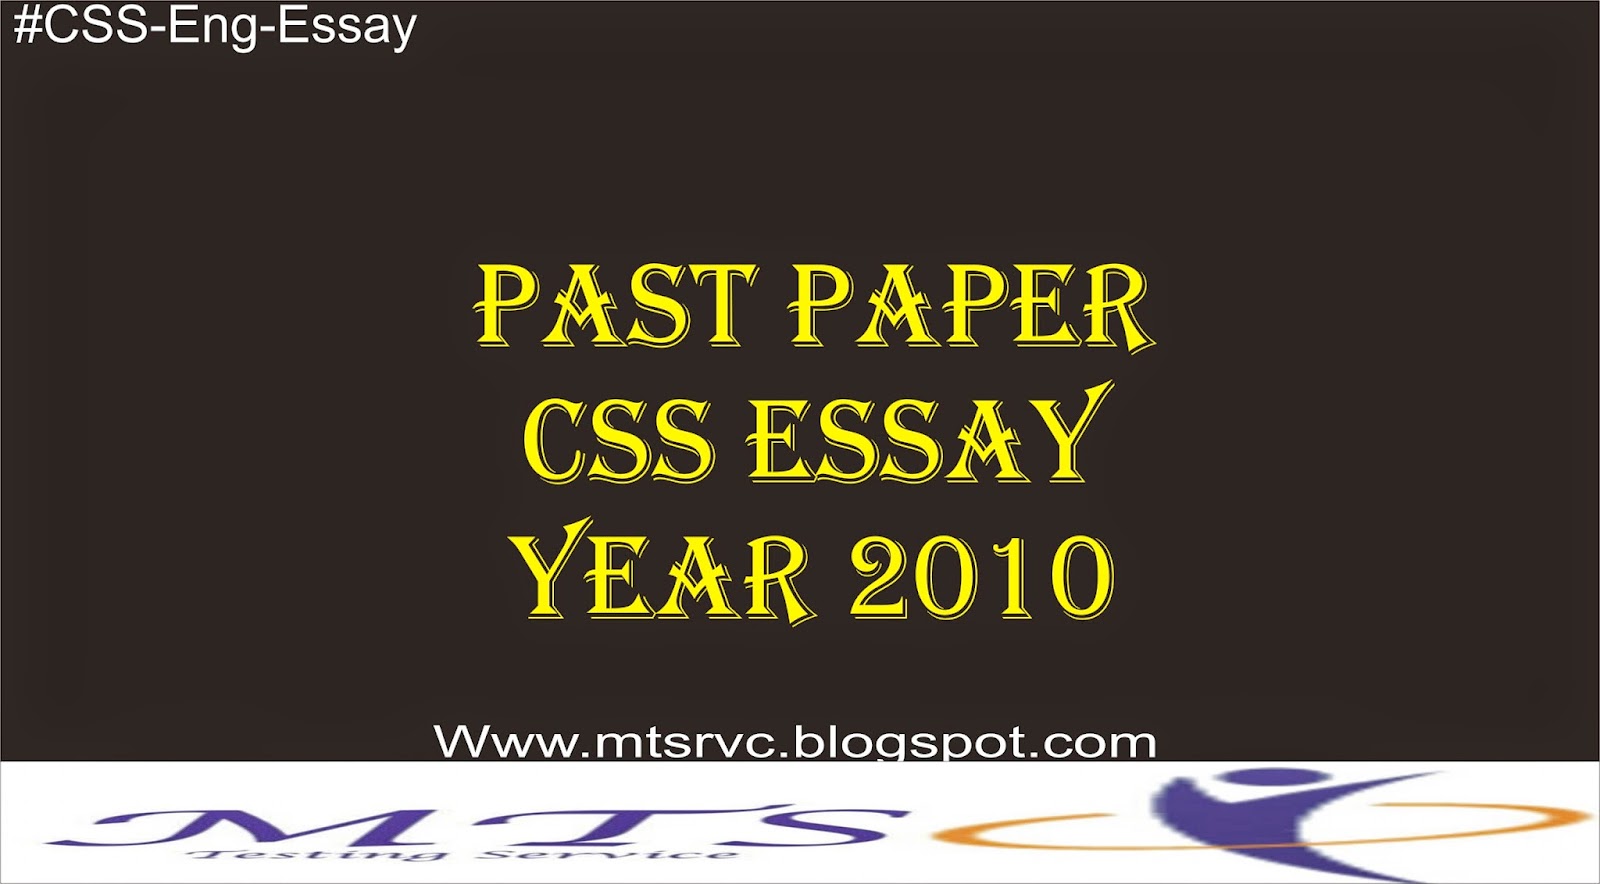 Online essay evaluation application